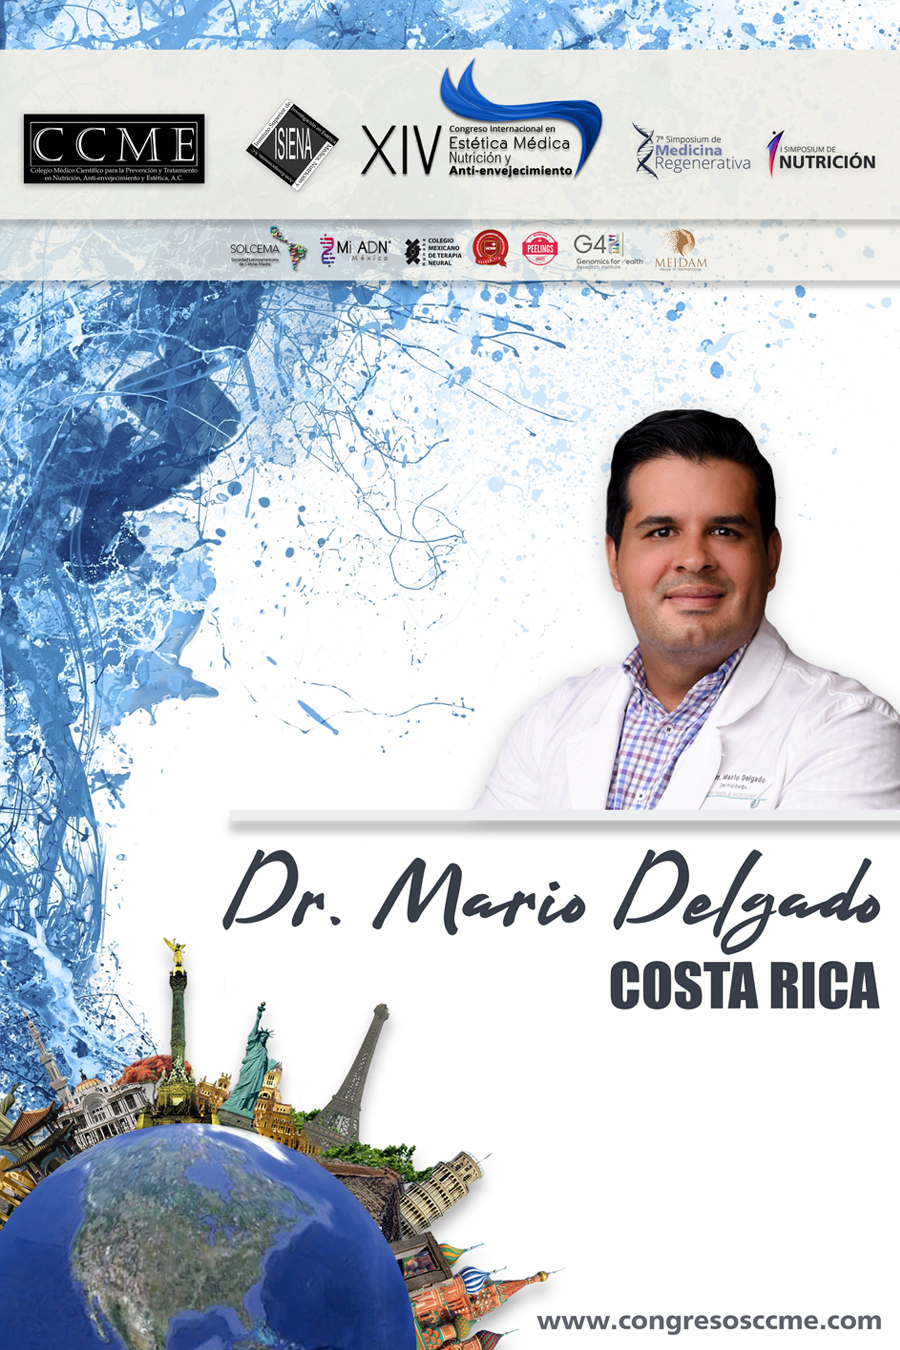 Dr. Mario Delgado Costa Rica